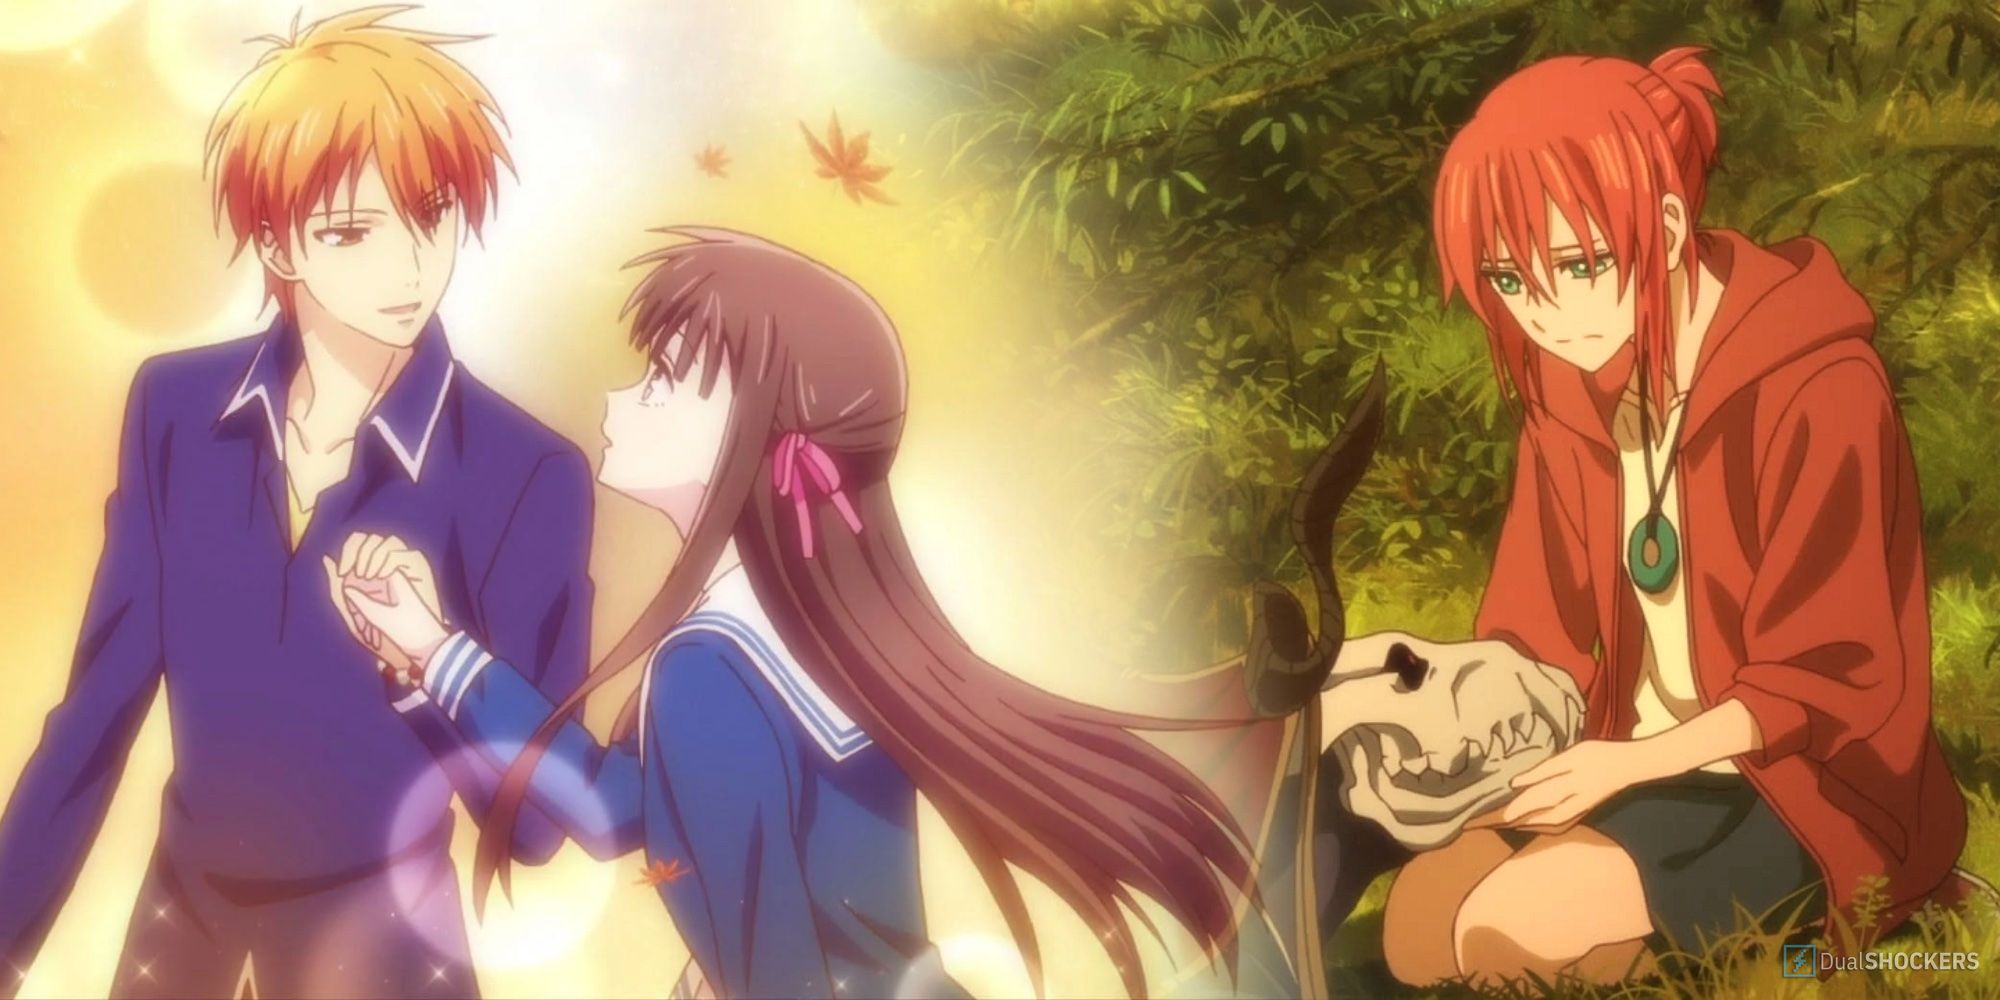 Supernatural Romance Anime That Puts Twilight to Shame - Sentai